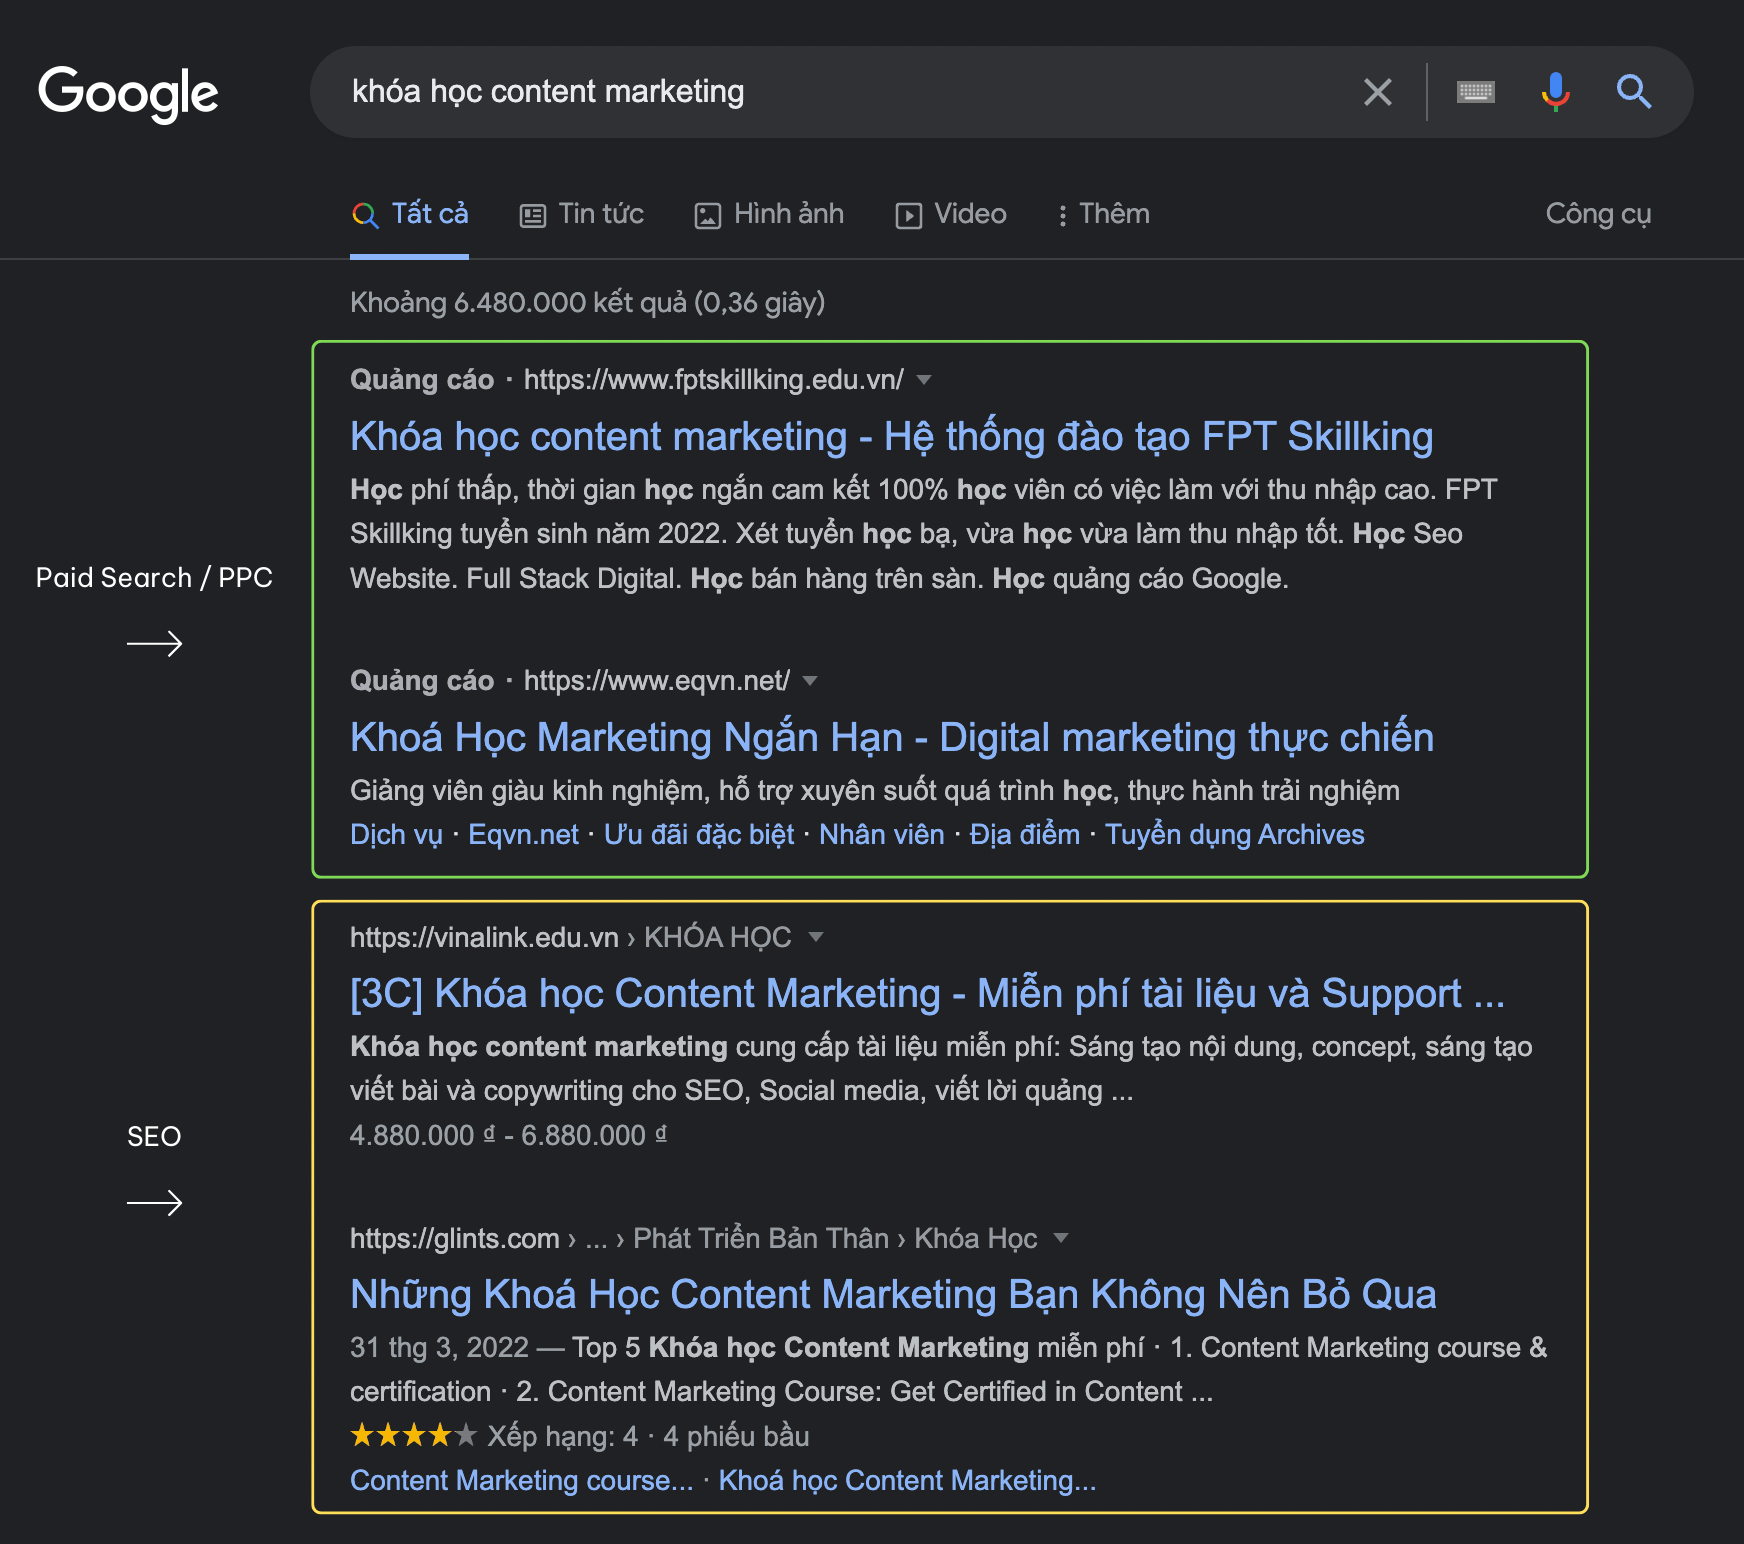 Search Engine Marketing bao gồm Paid Search & SEO